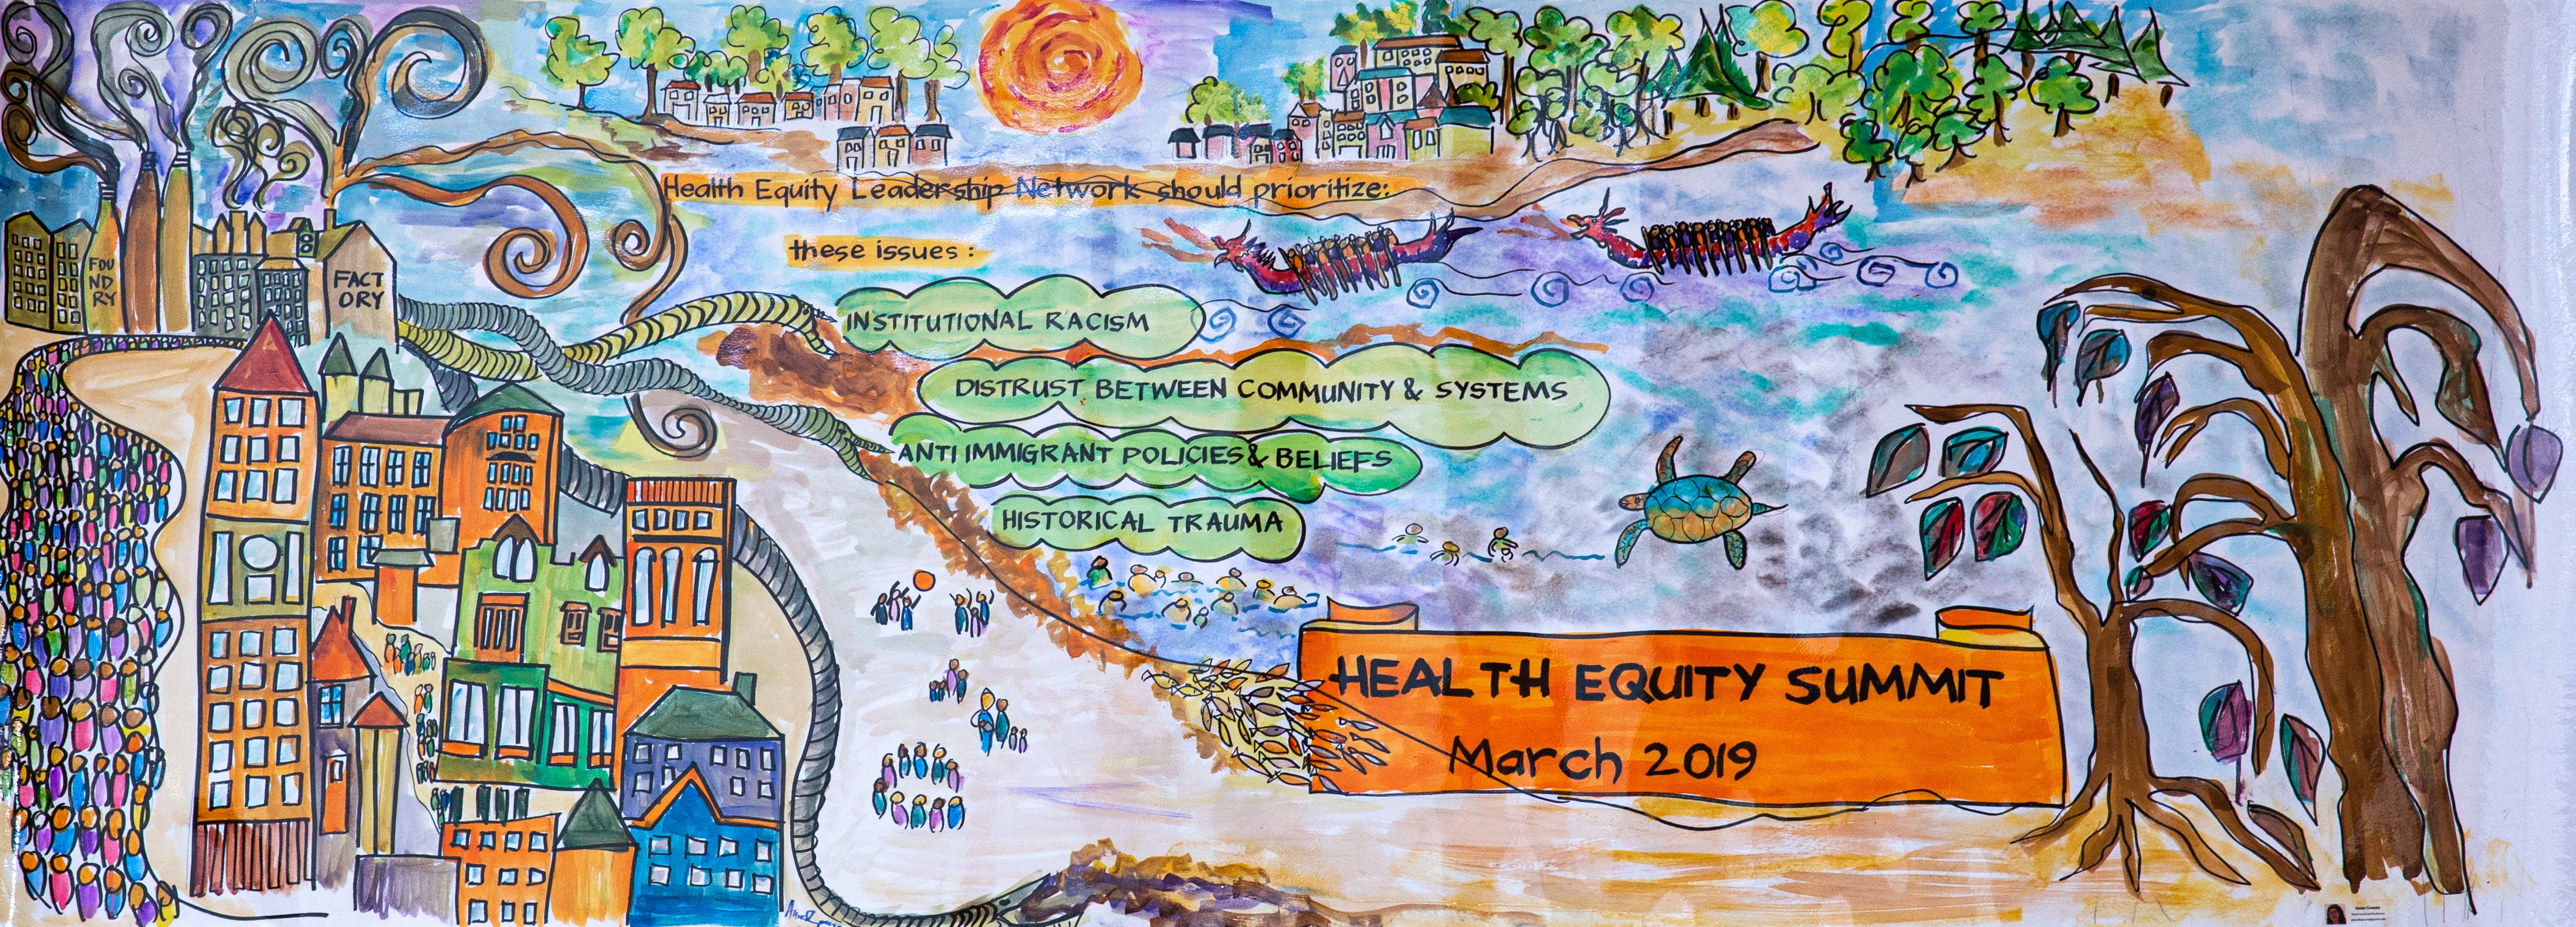 health equity summit mural